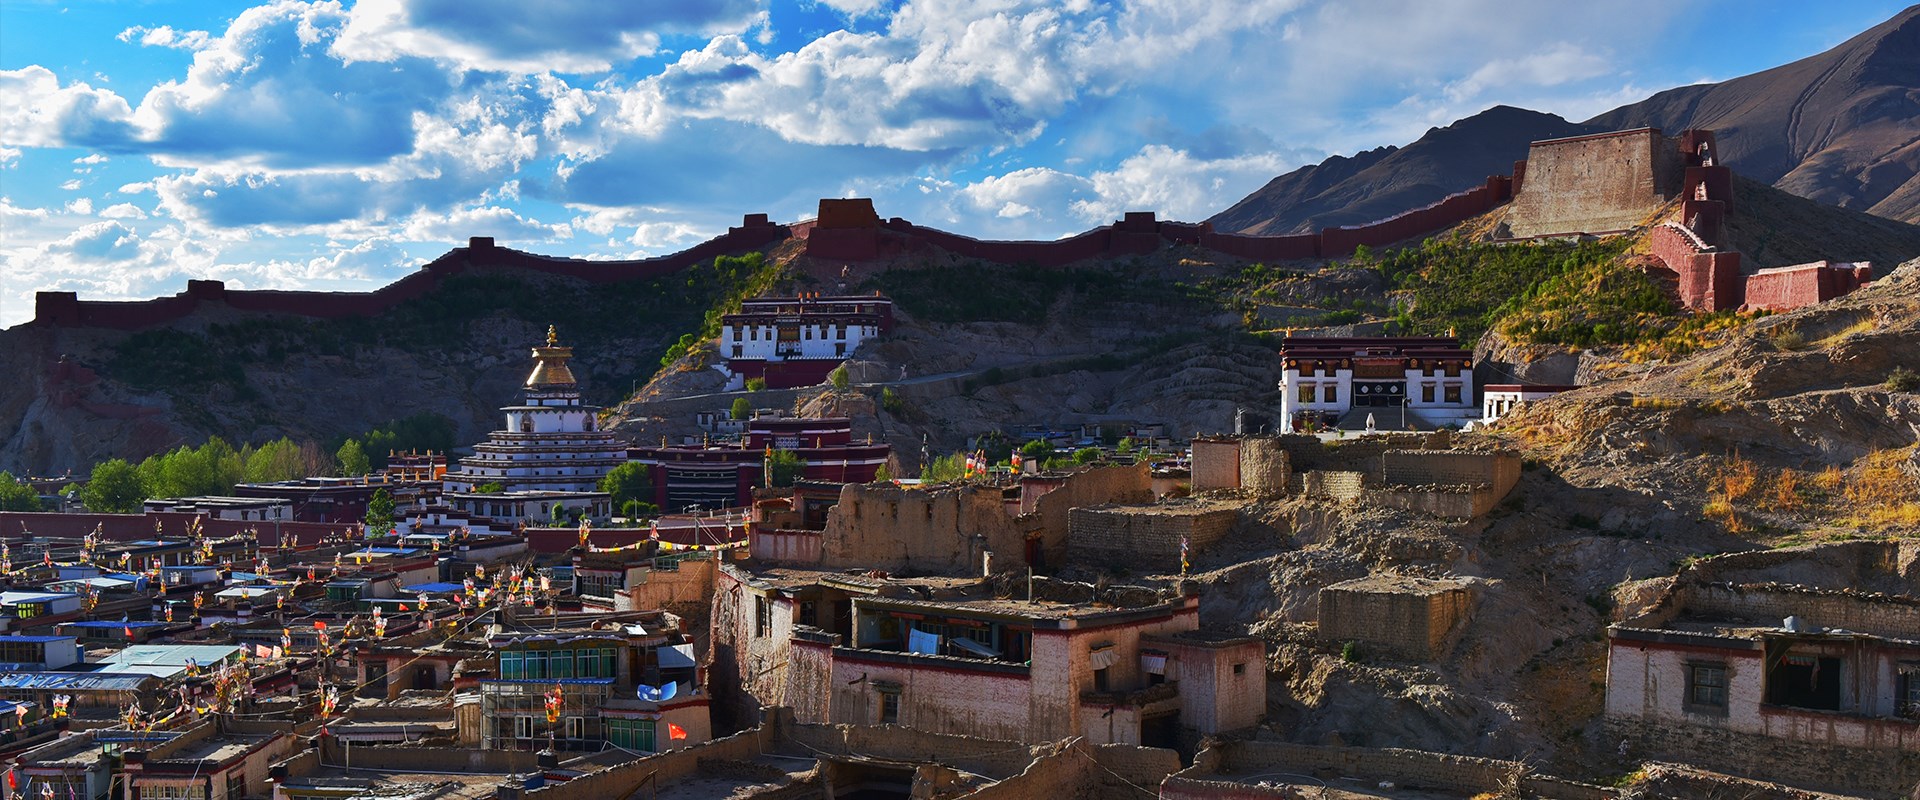 Tibet Tour Destination Shigatse Prefecture